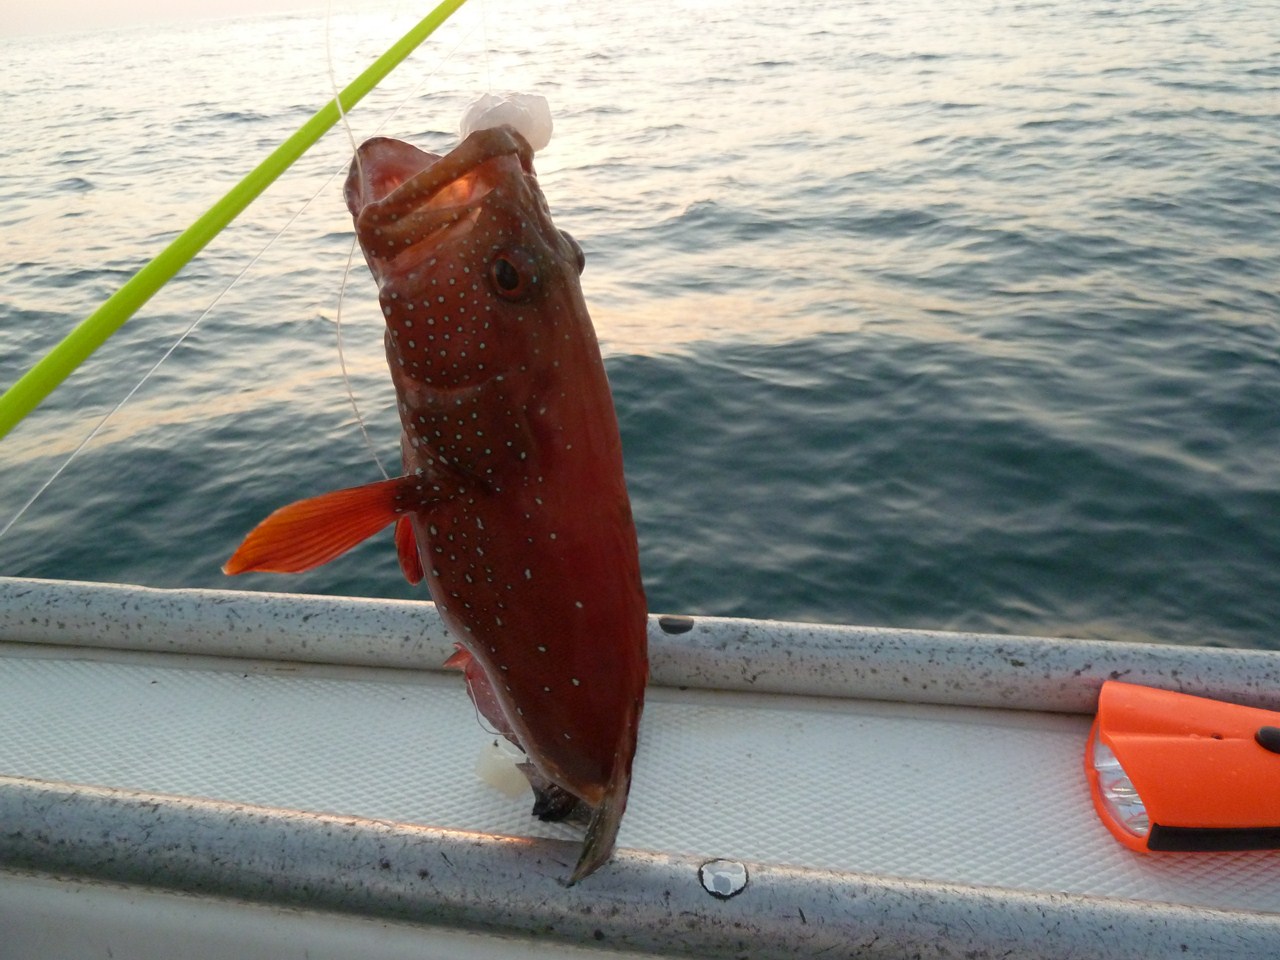 http://www.shintoko.jp/engblog/archives/images/2011/10/111028_qatarfishing941.jpg